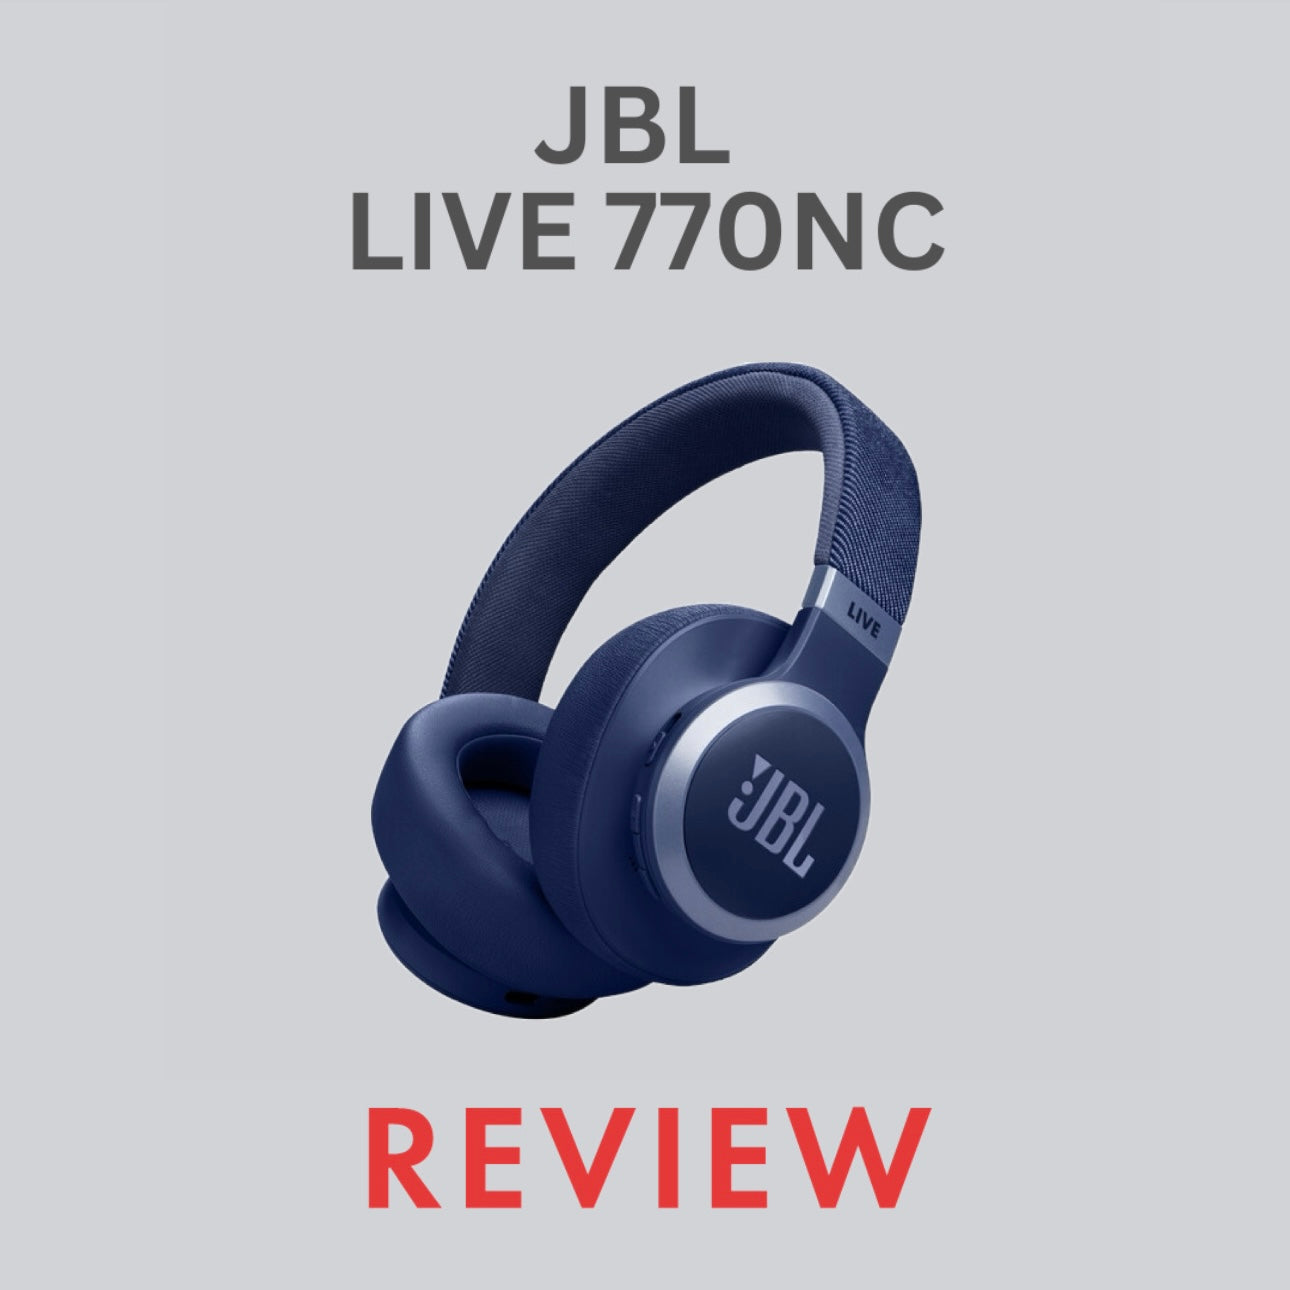 JBL Live 770NC Review